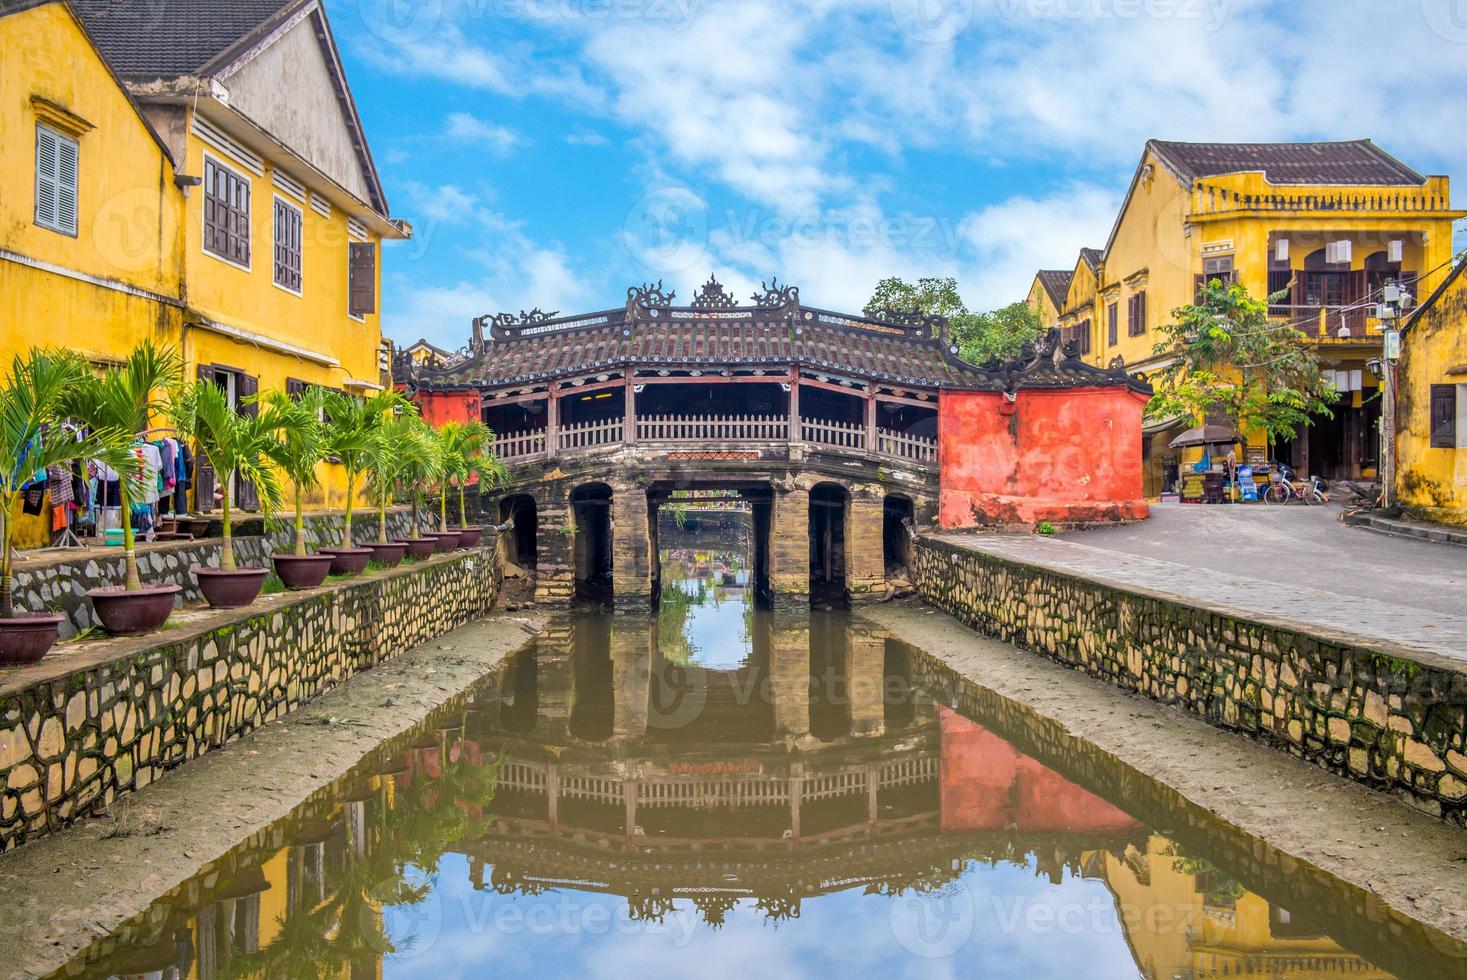 ponte coberta japonesa também conhecida como lai vien kieu em hoi an, vietnã foto